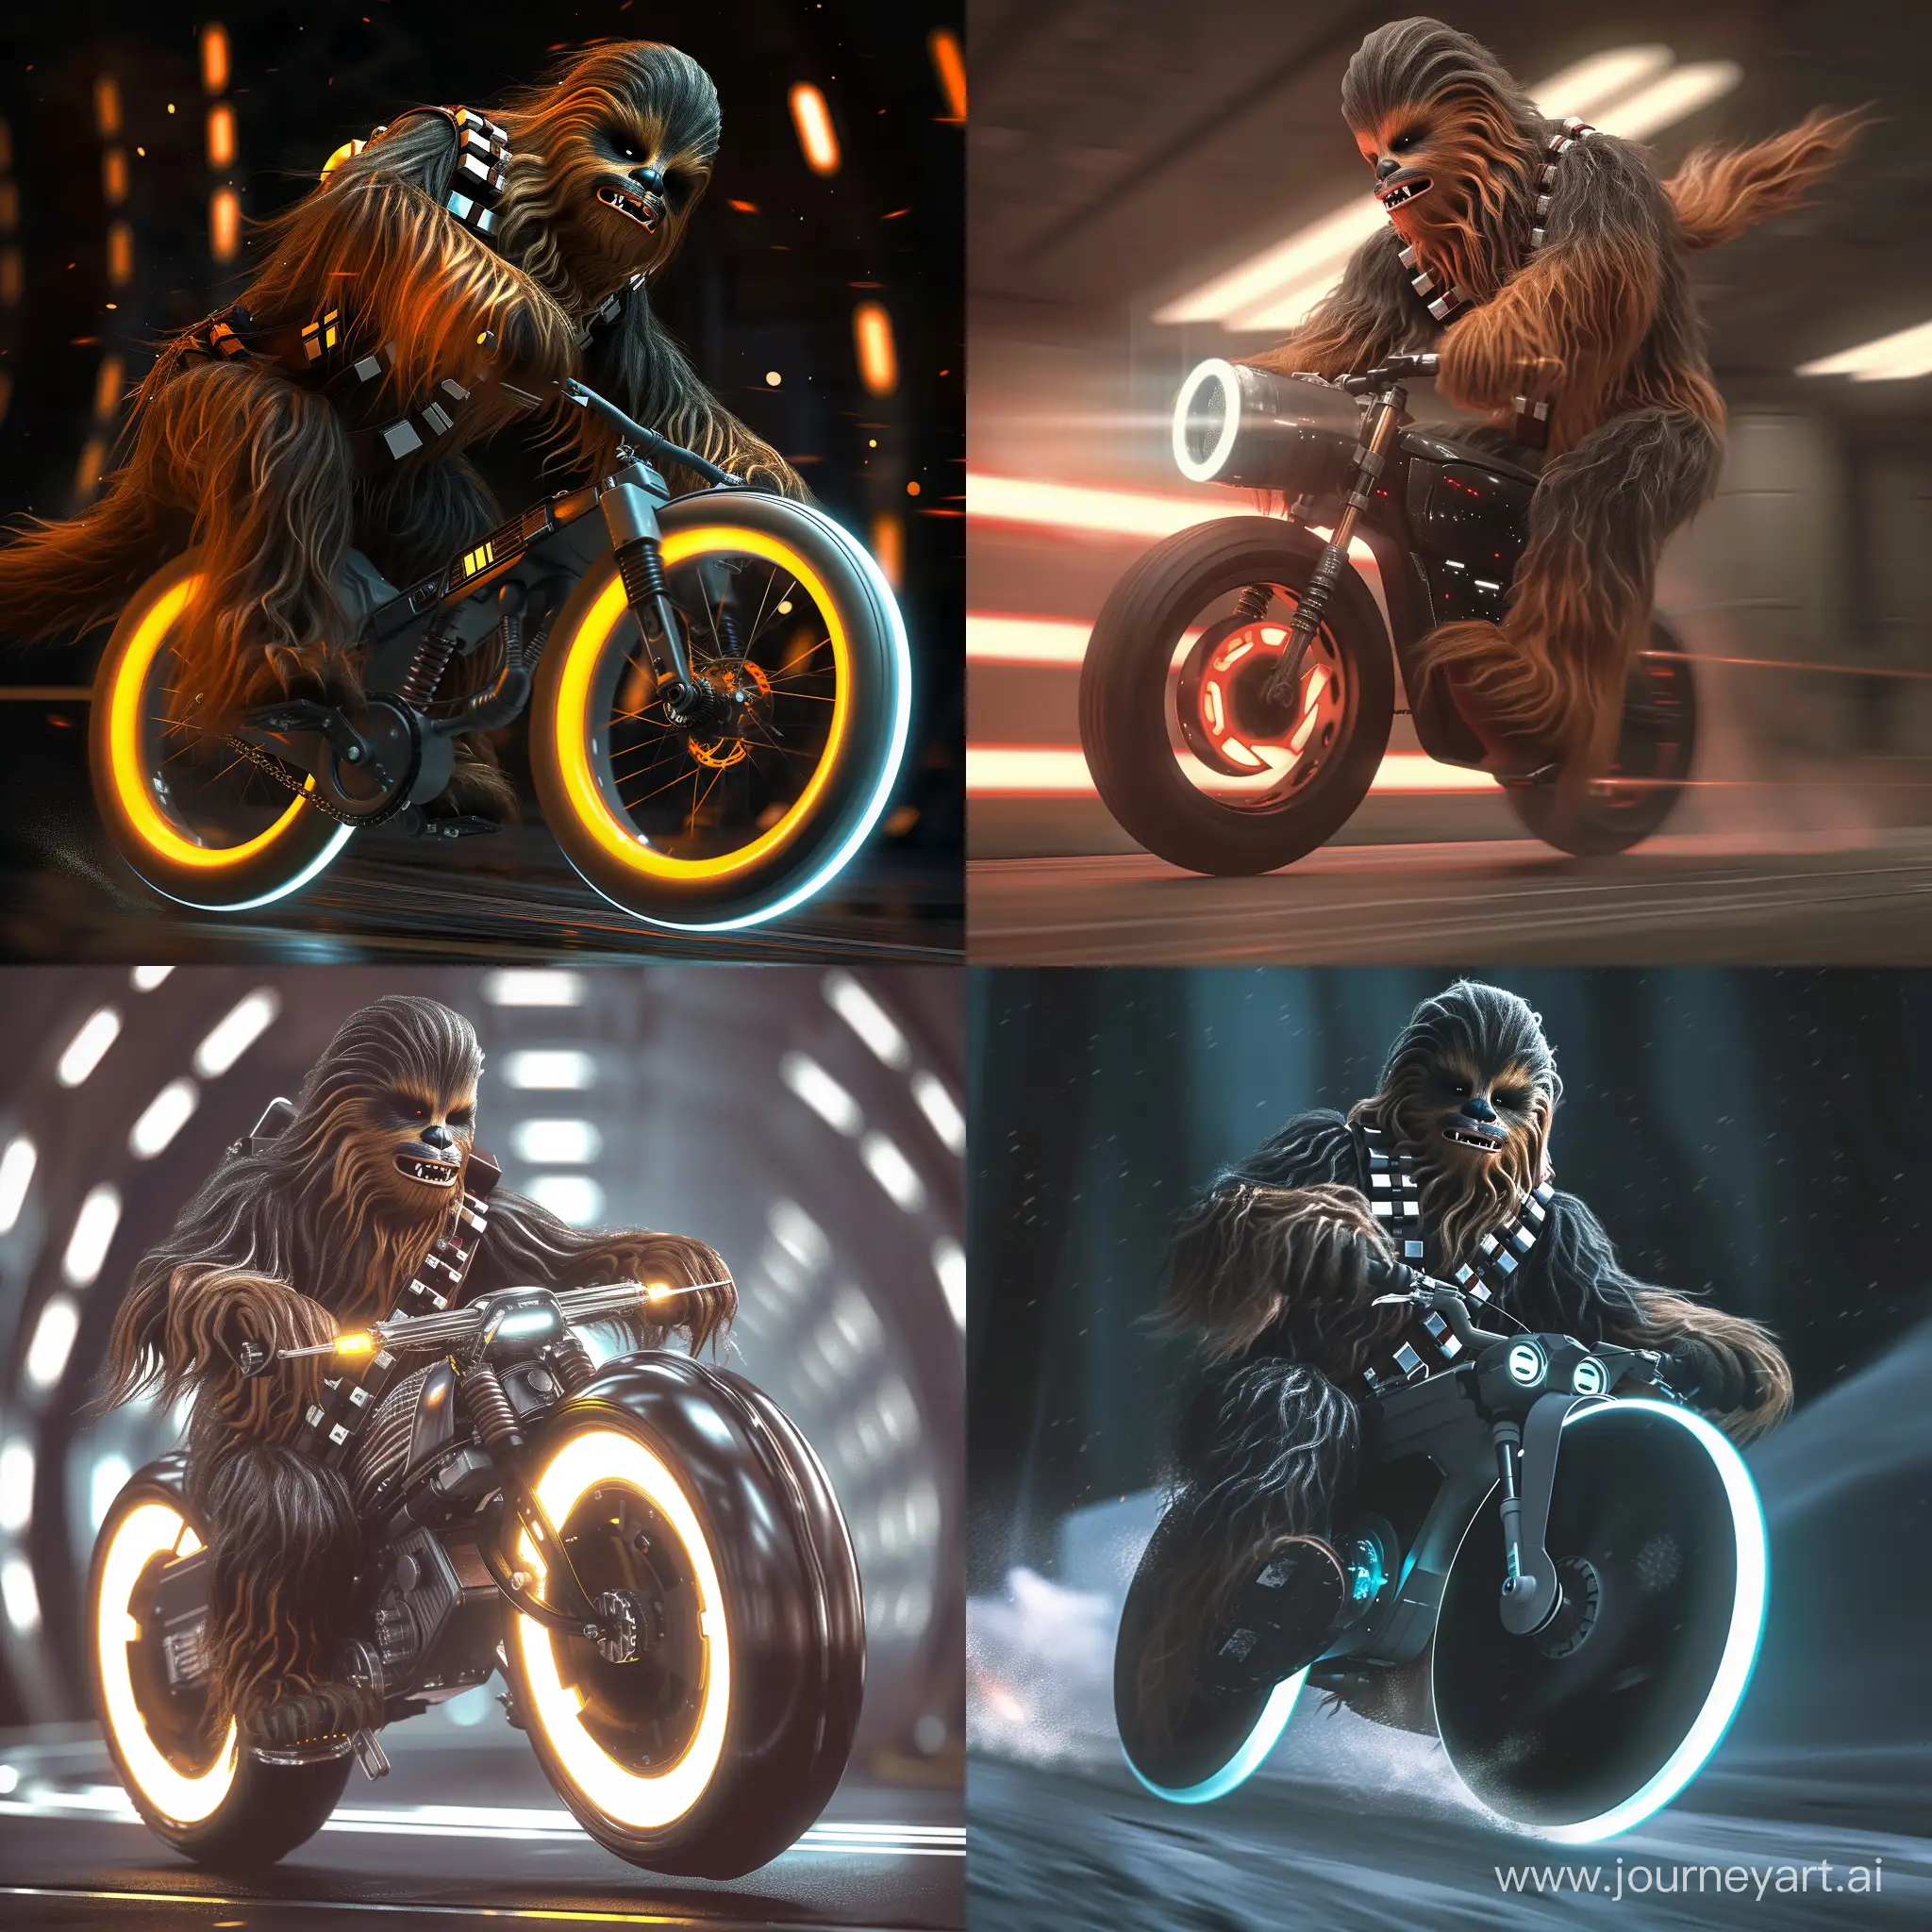 A chewbacca riding a tron bike, photorealistic, 8k